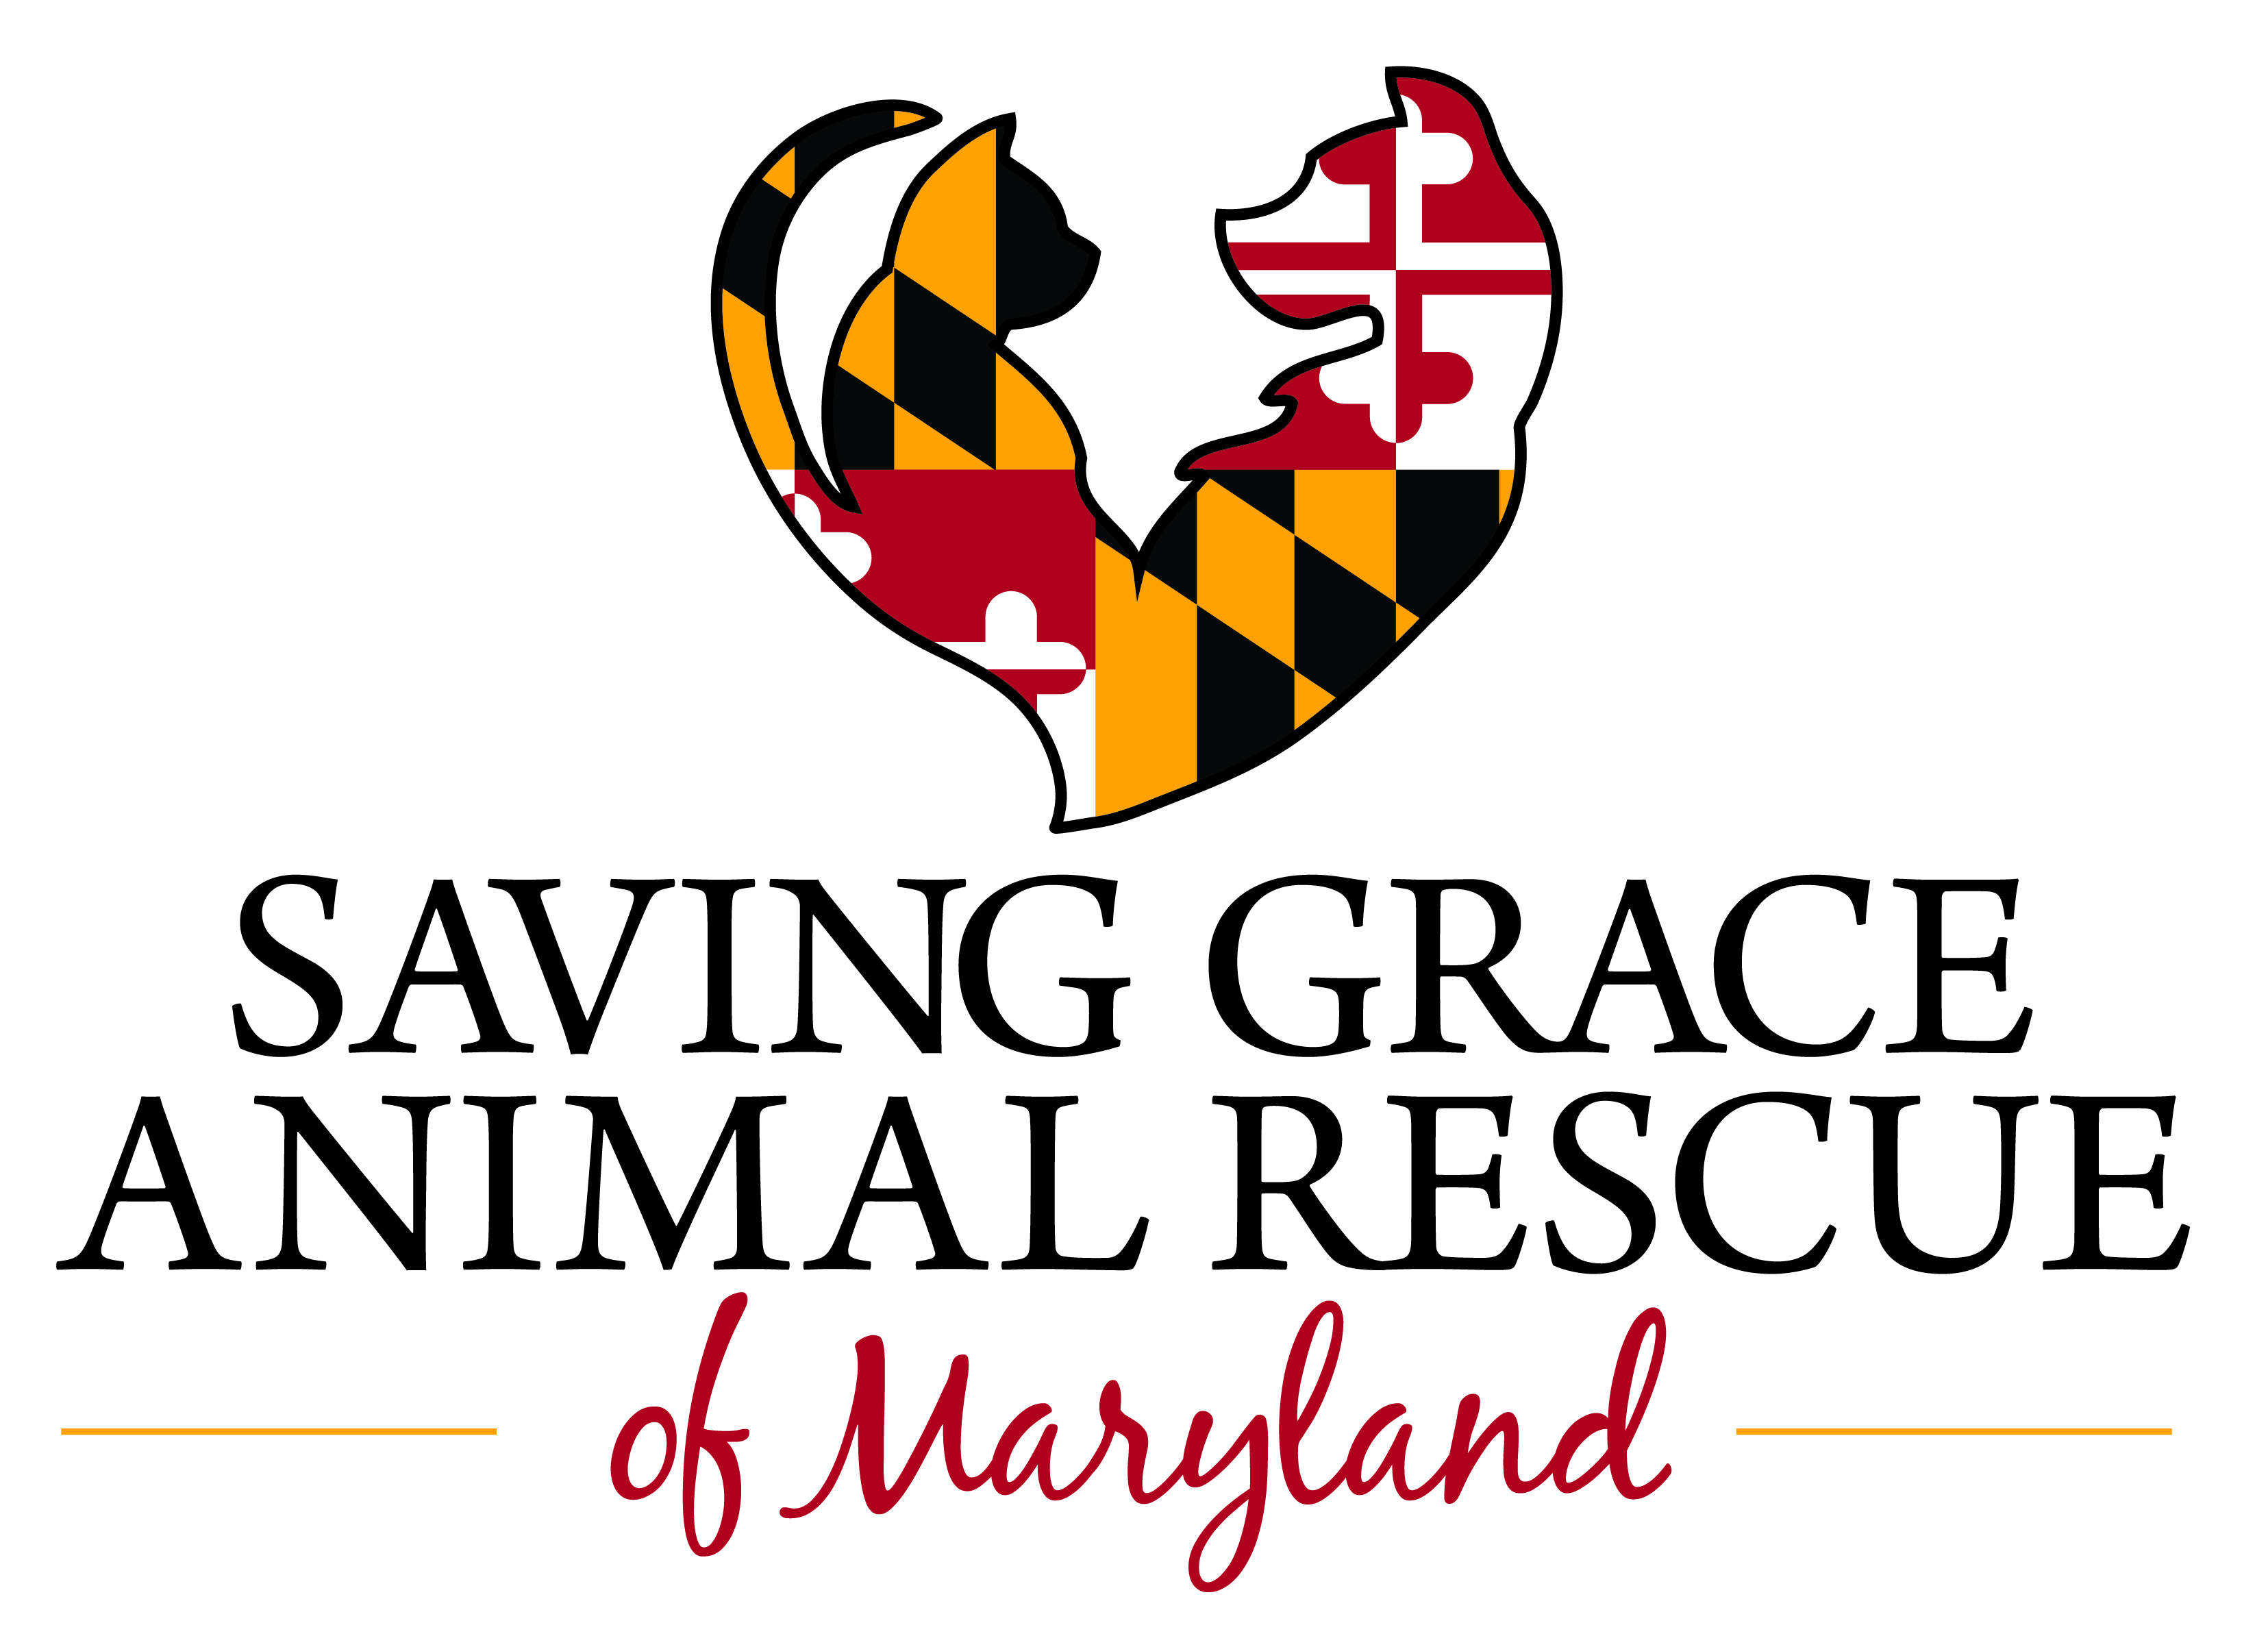 Saving Grace Animal Rescue of Maryland